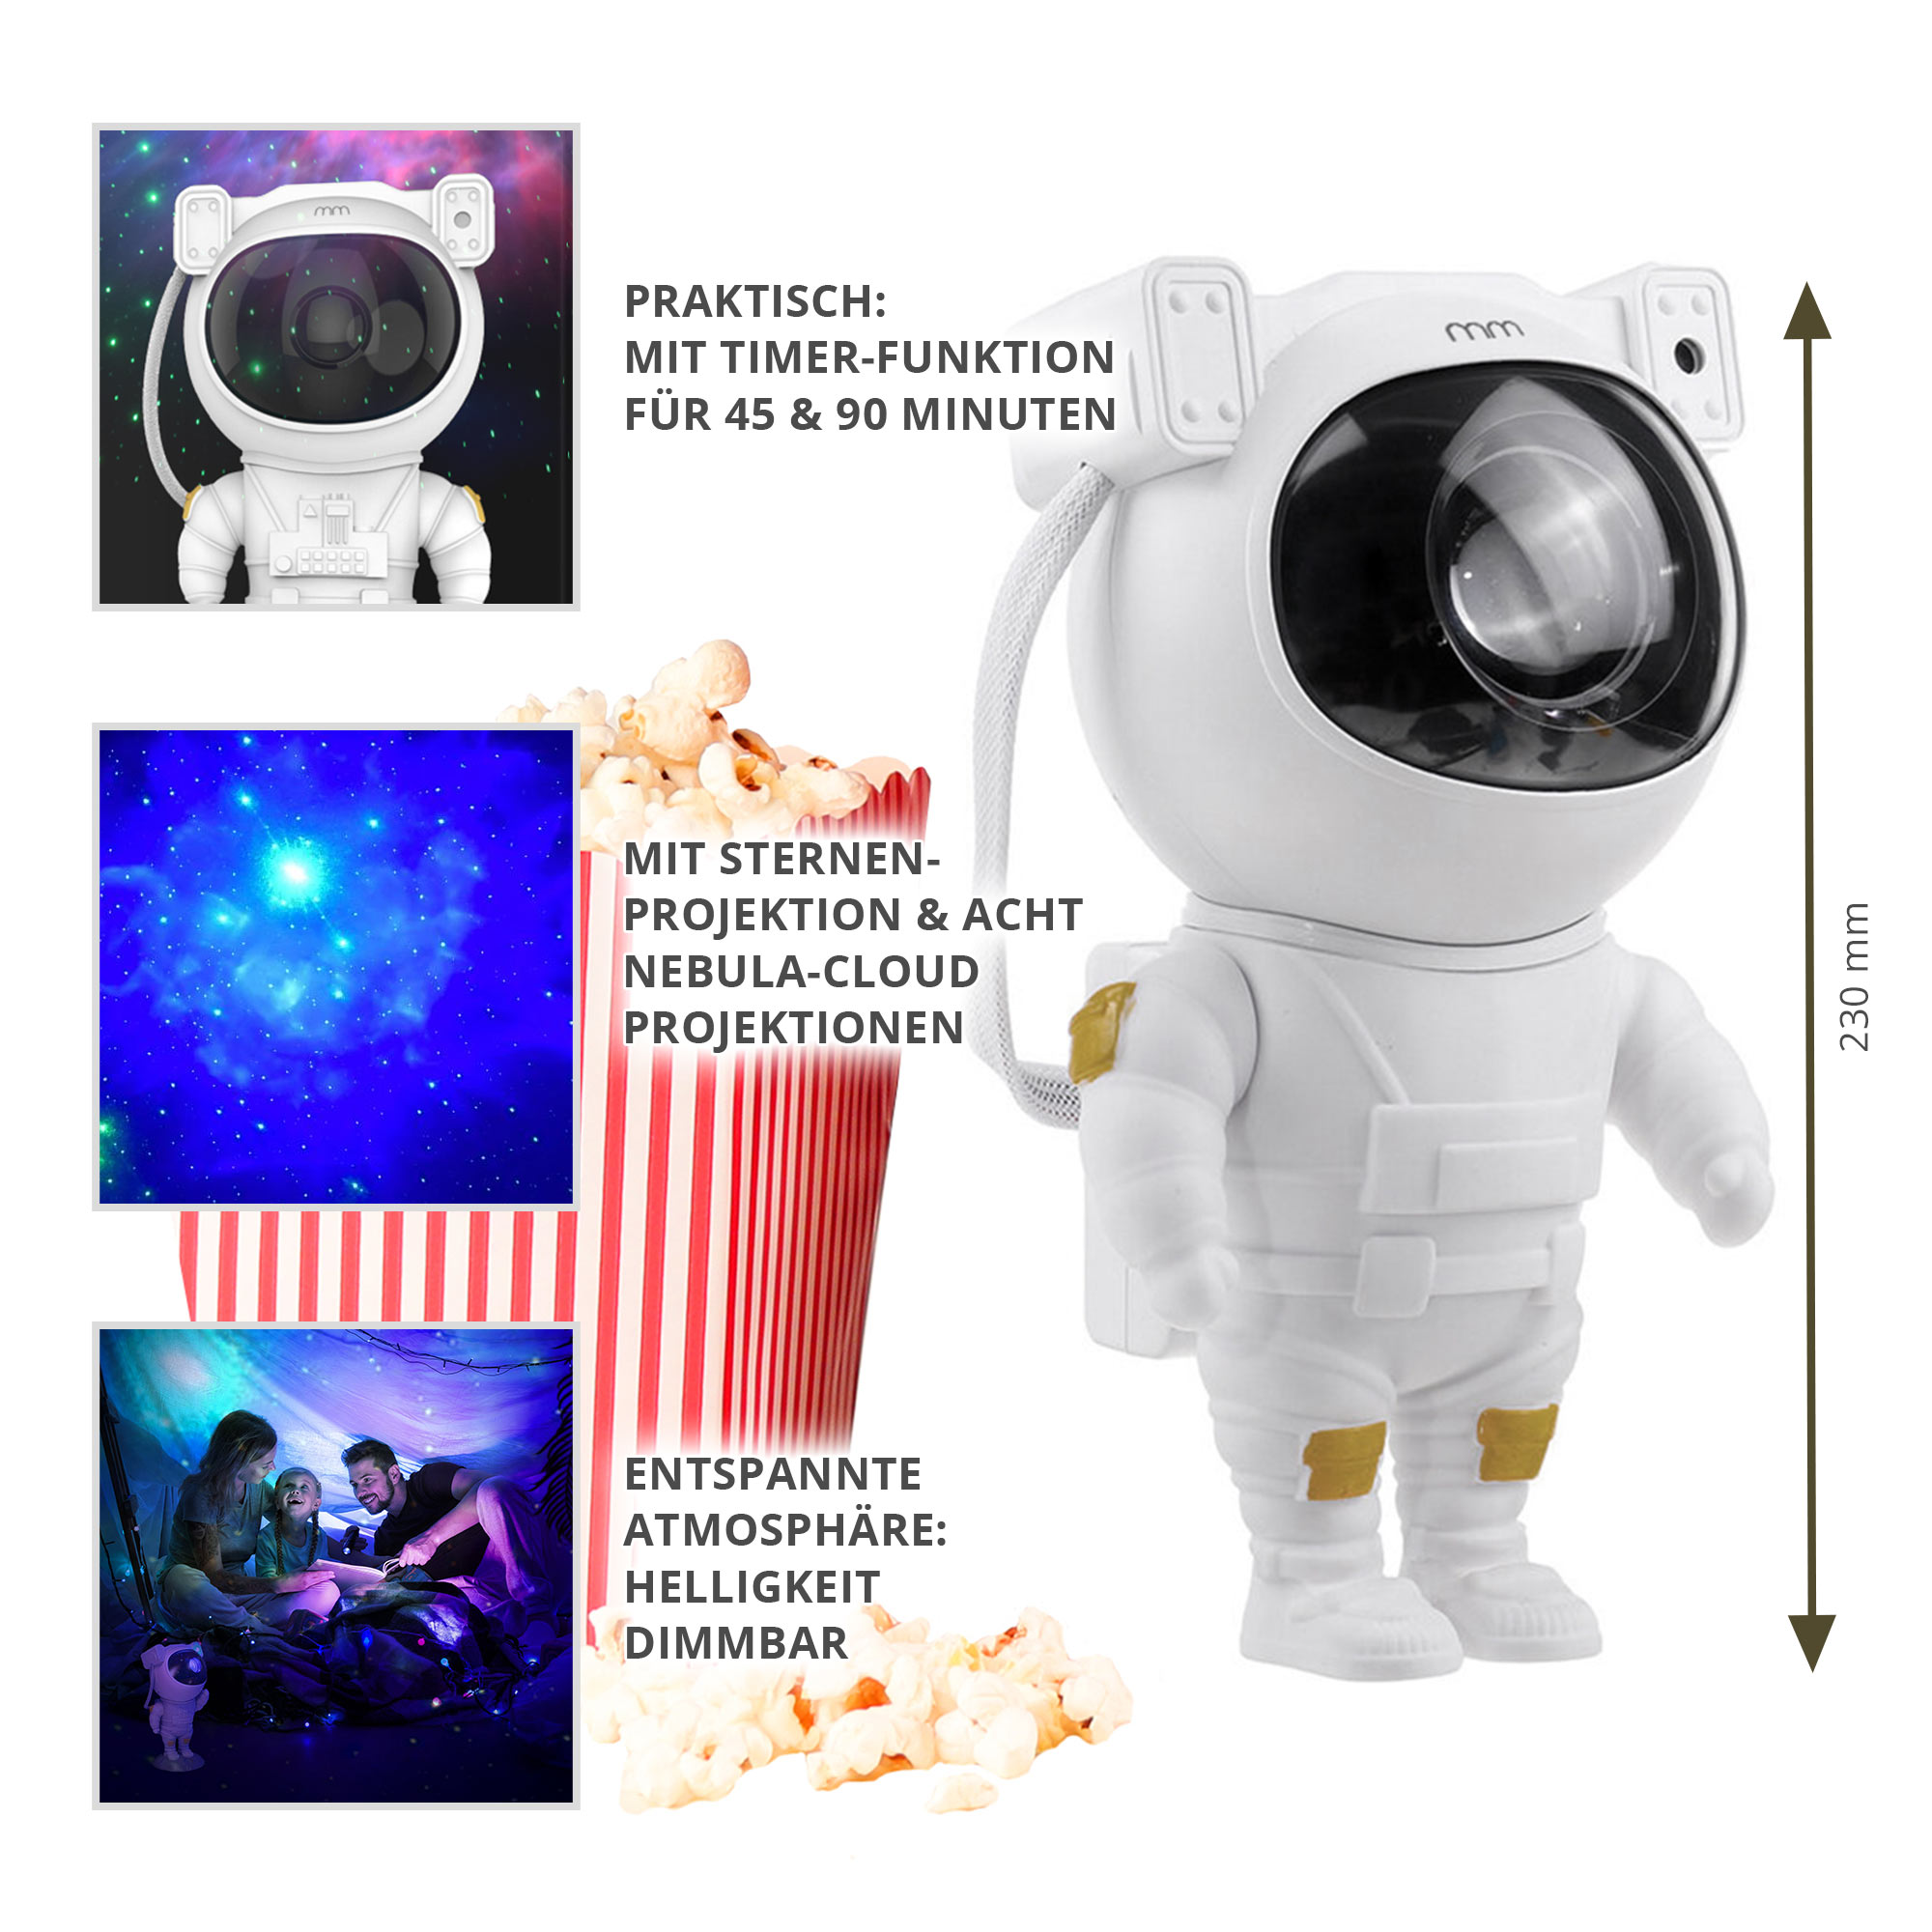 Astronaut Laser Projector